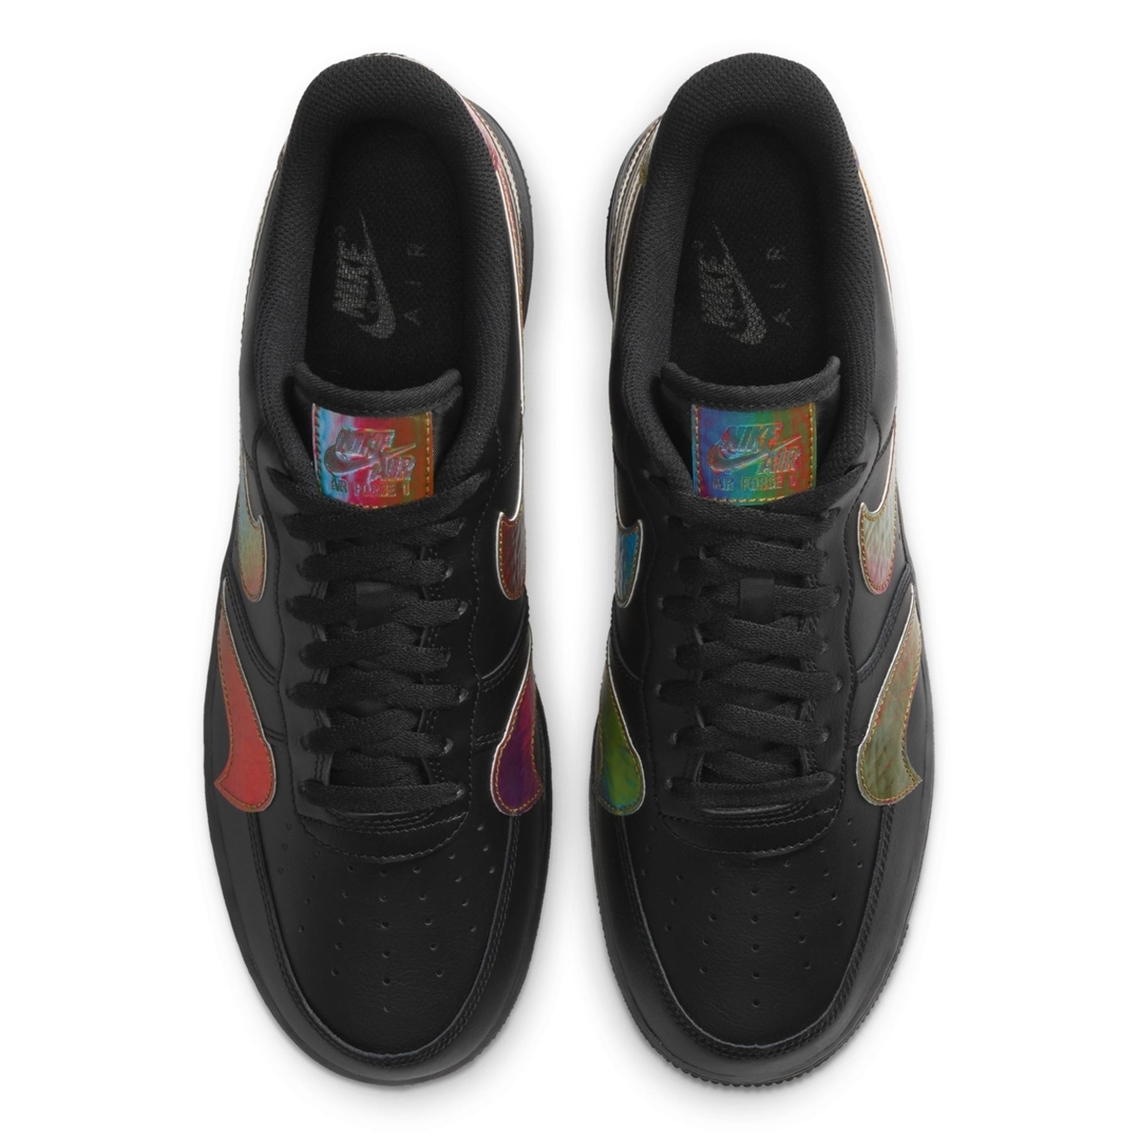 Nike nike black cheetah print shoes clearance sale Black Multi Color 3